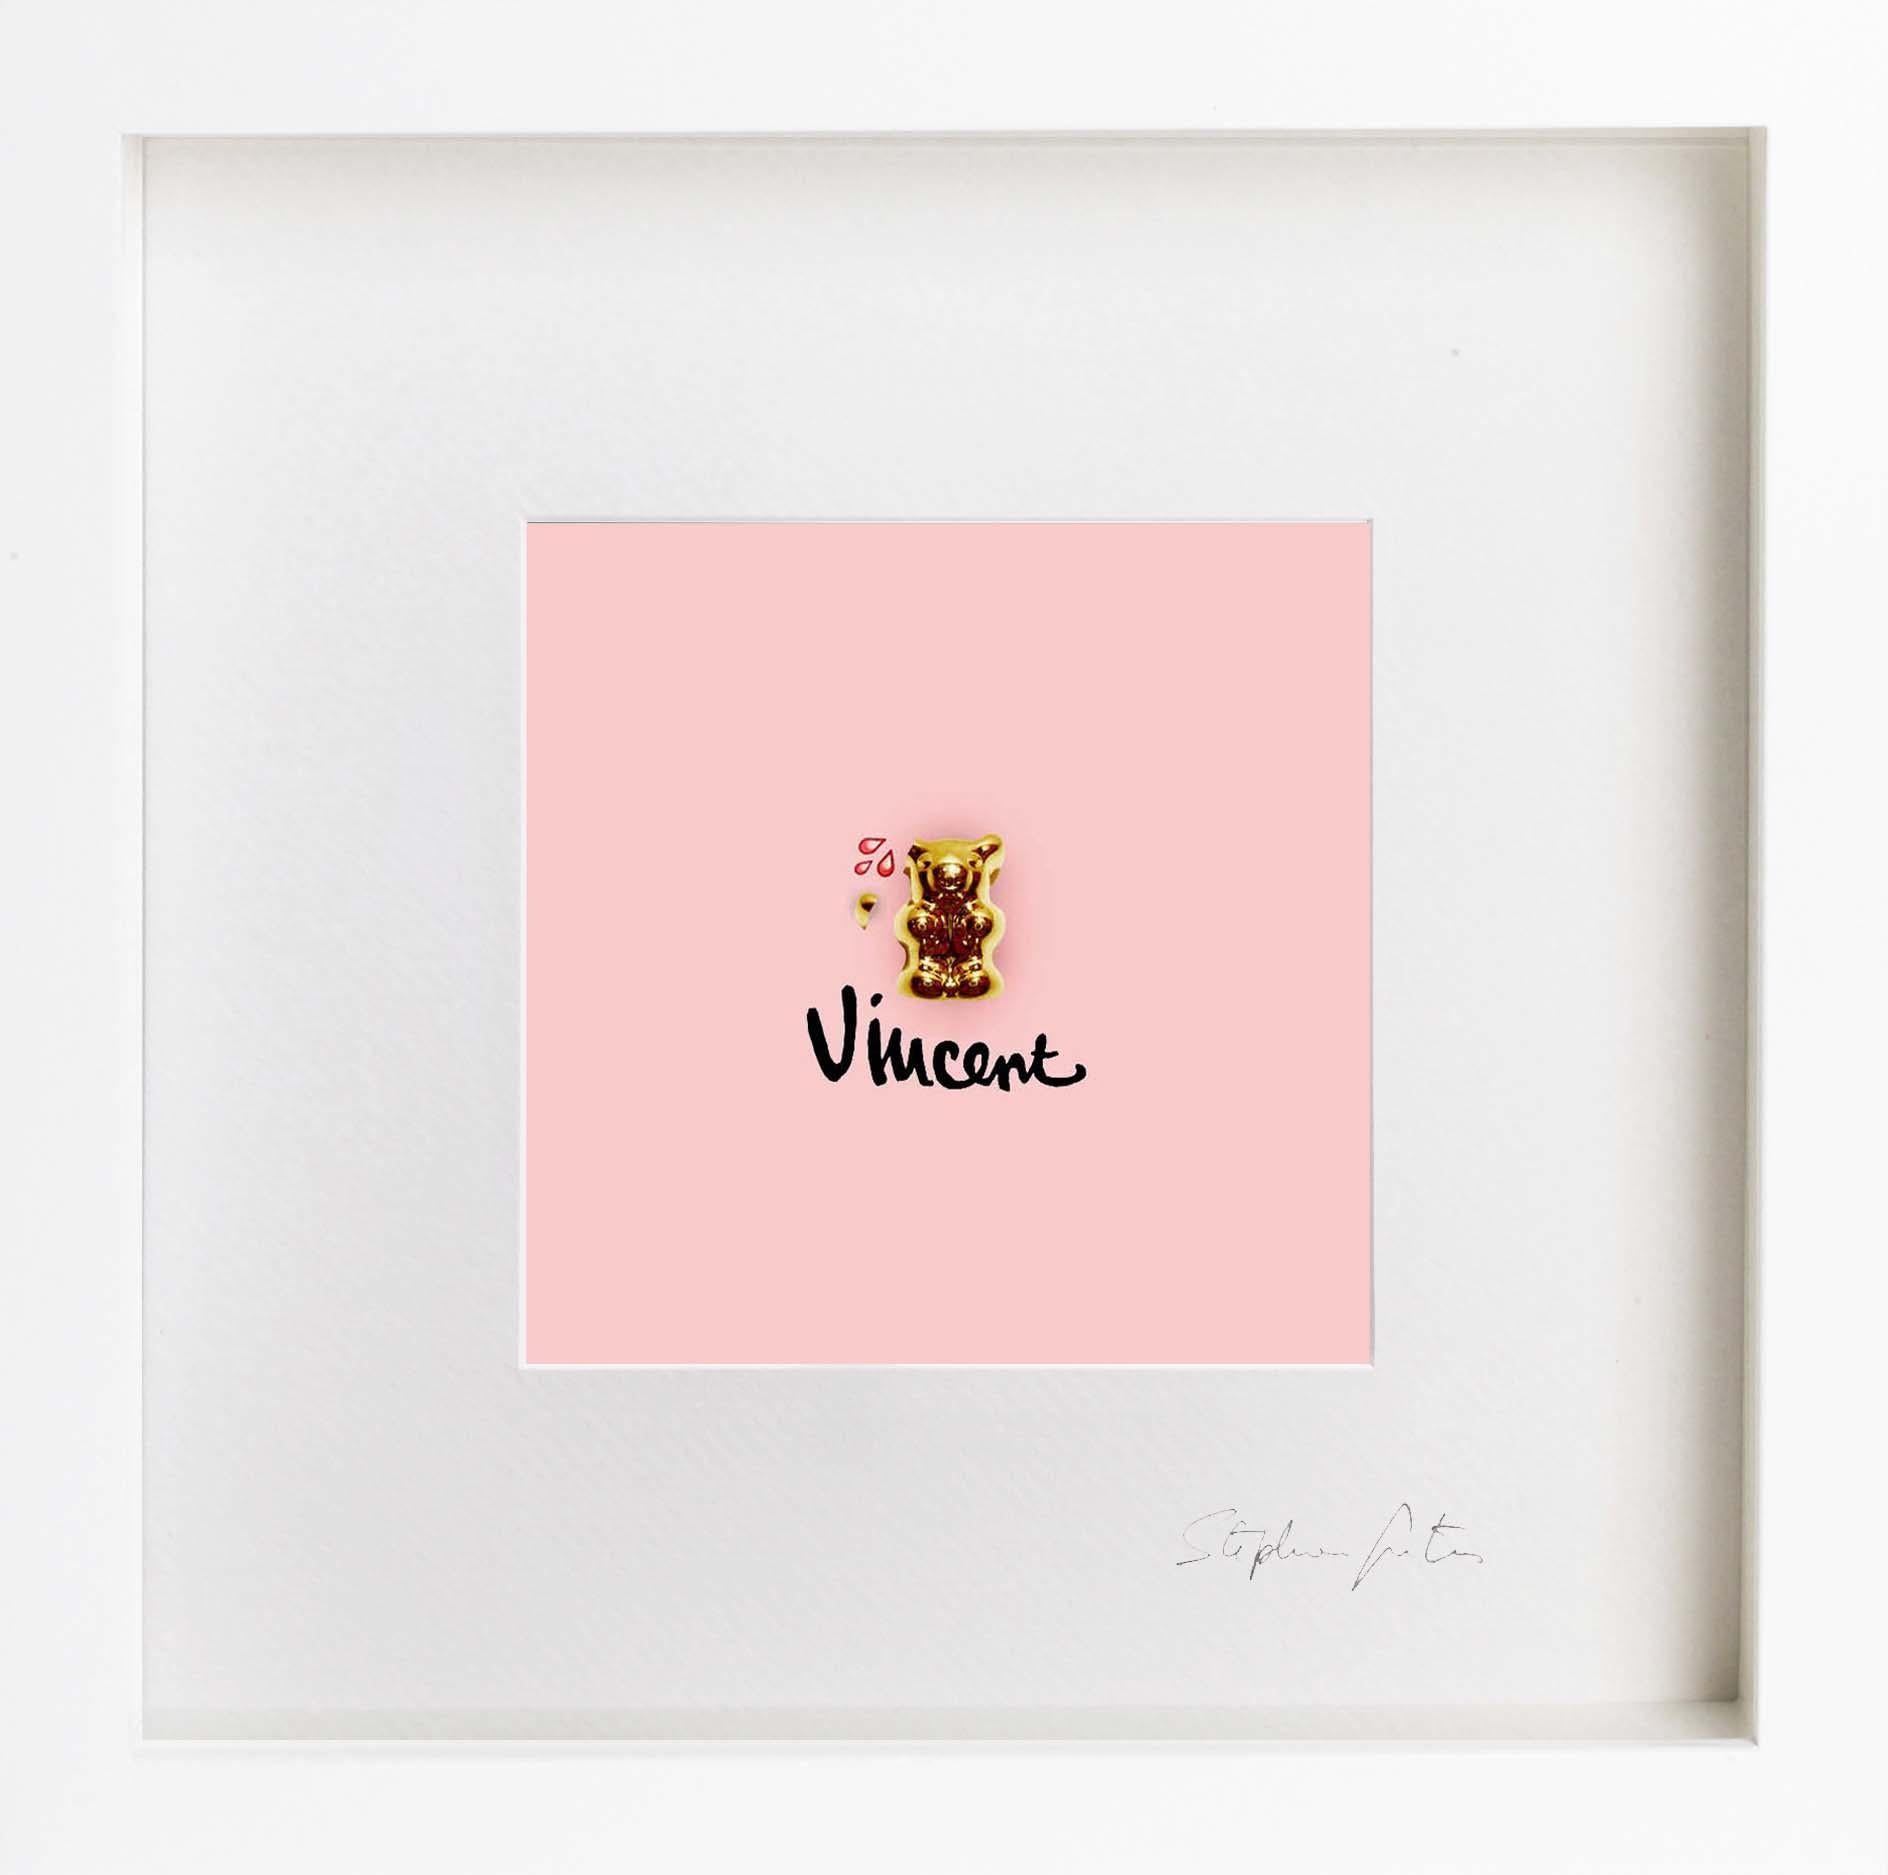 Vincent - Contemporary Mixed Media Art by Stéphane Gautier